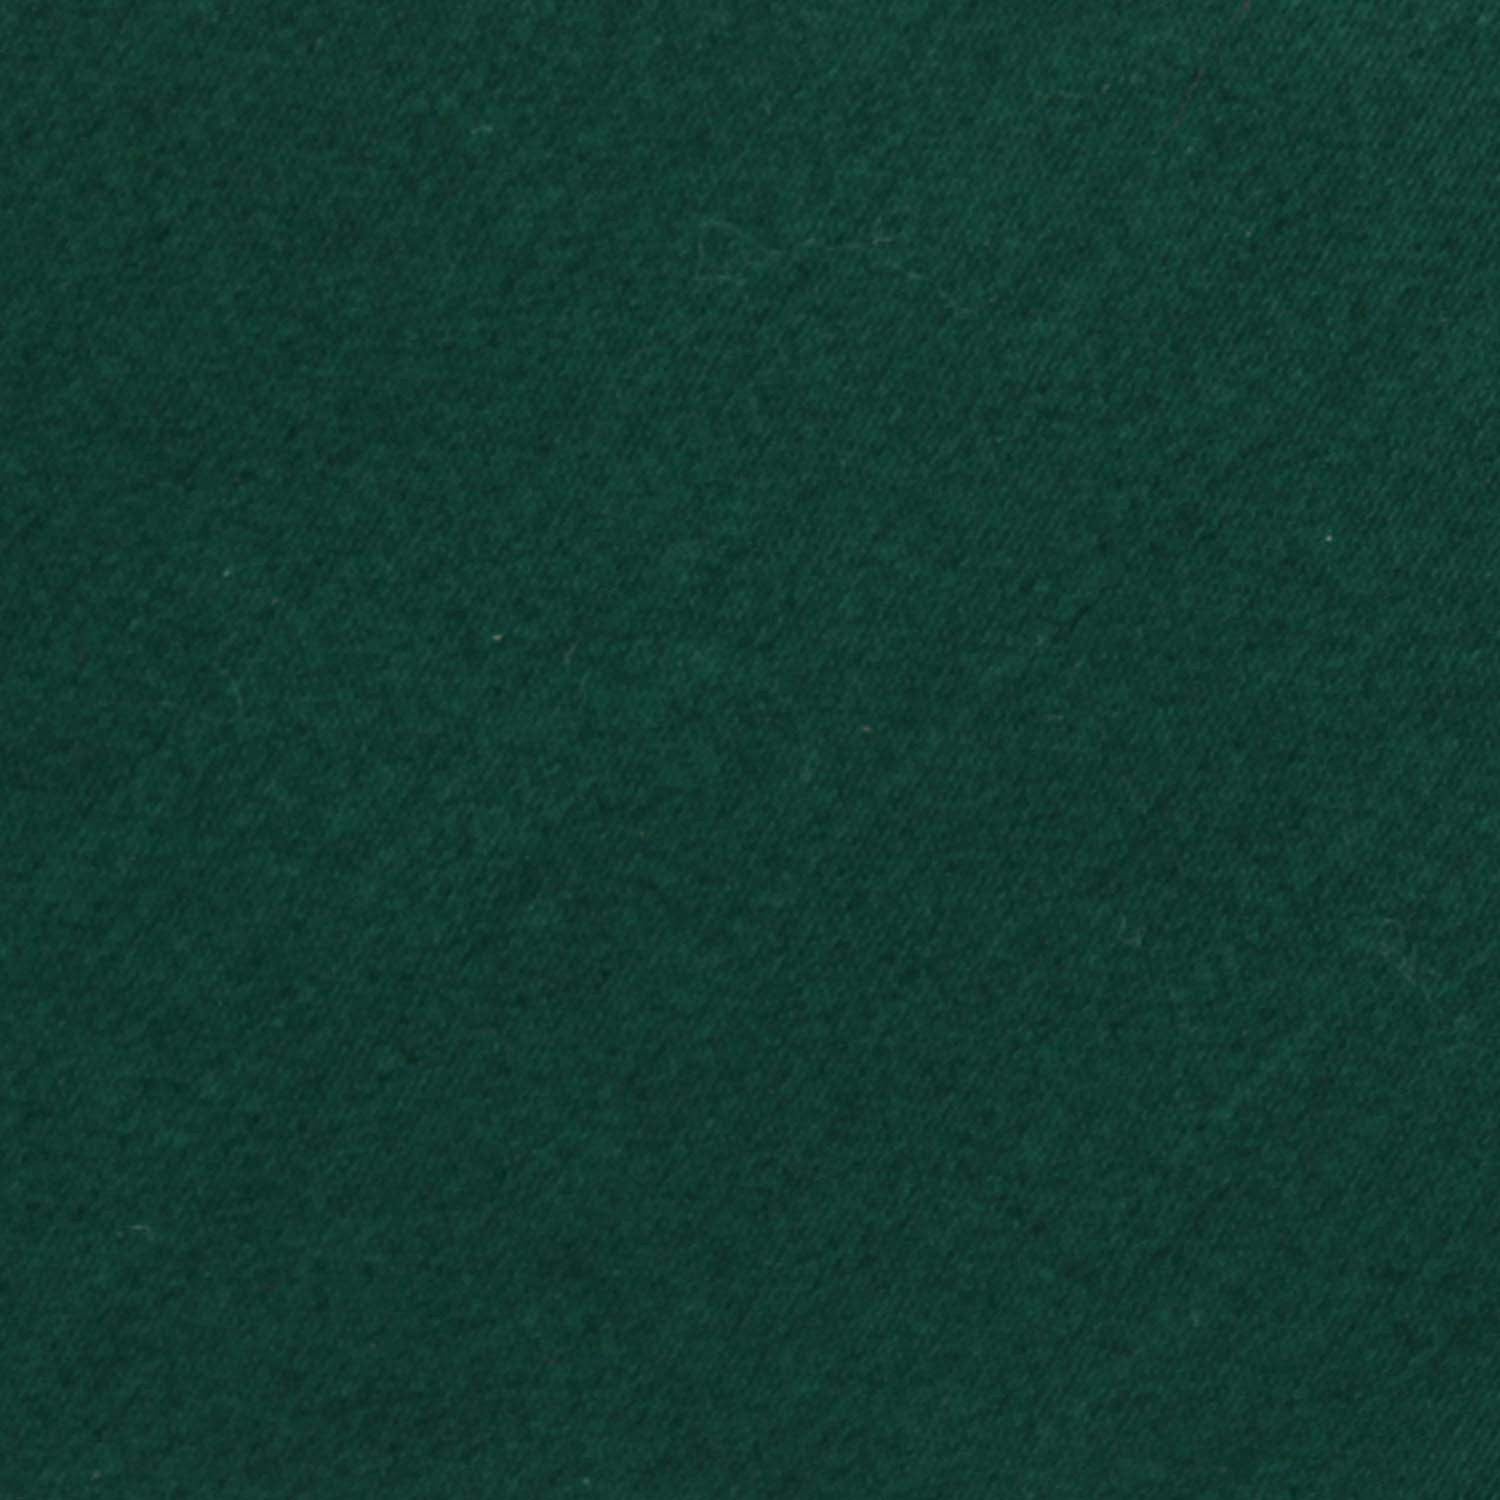 Emerald Green Cotton Fabric Pocket Square C162